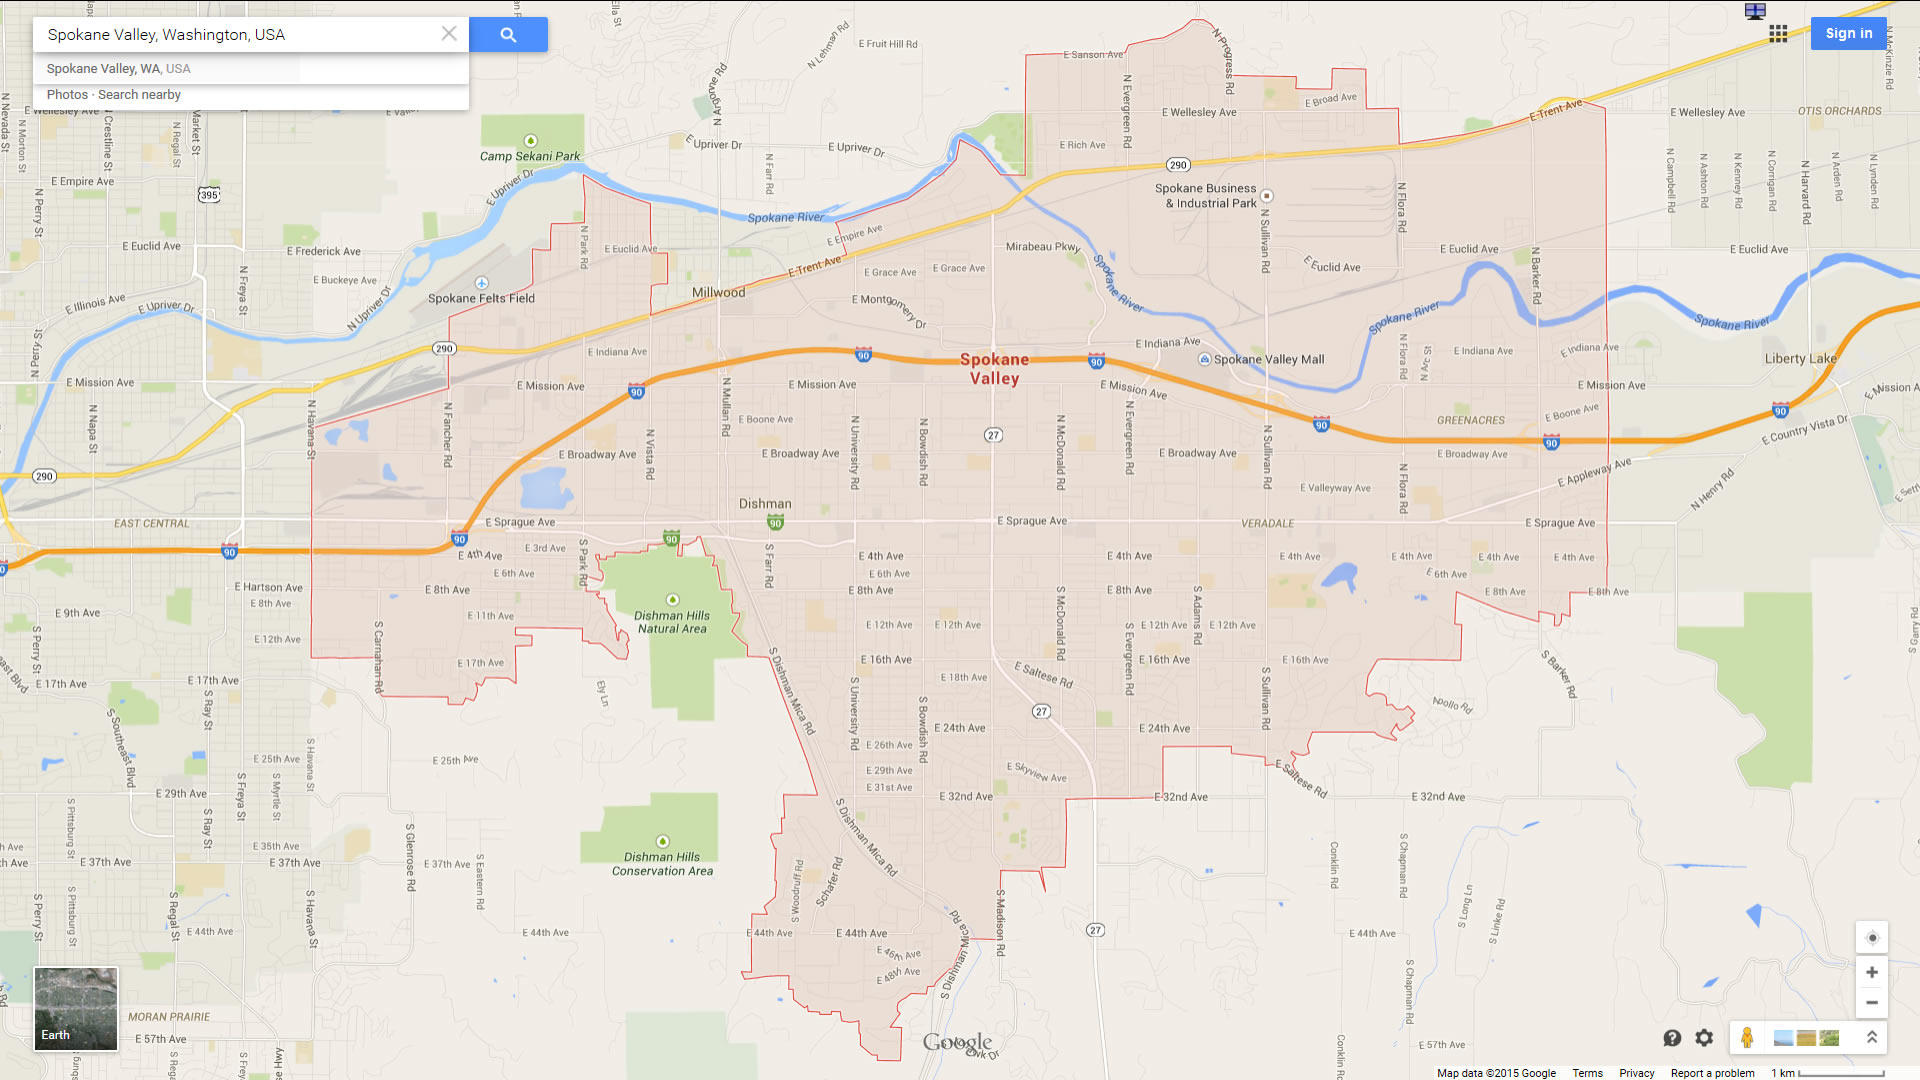 spokane valley map washington us